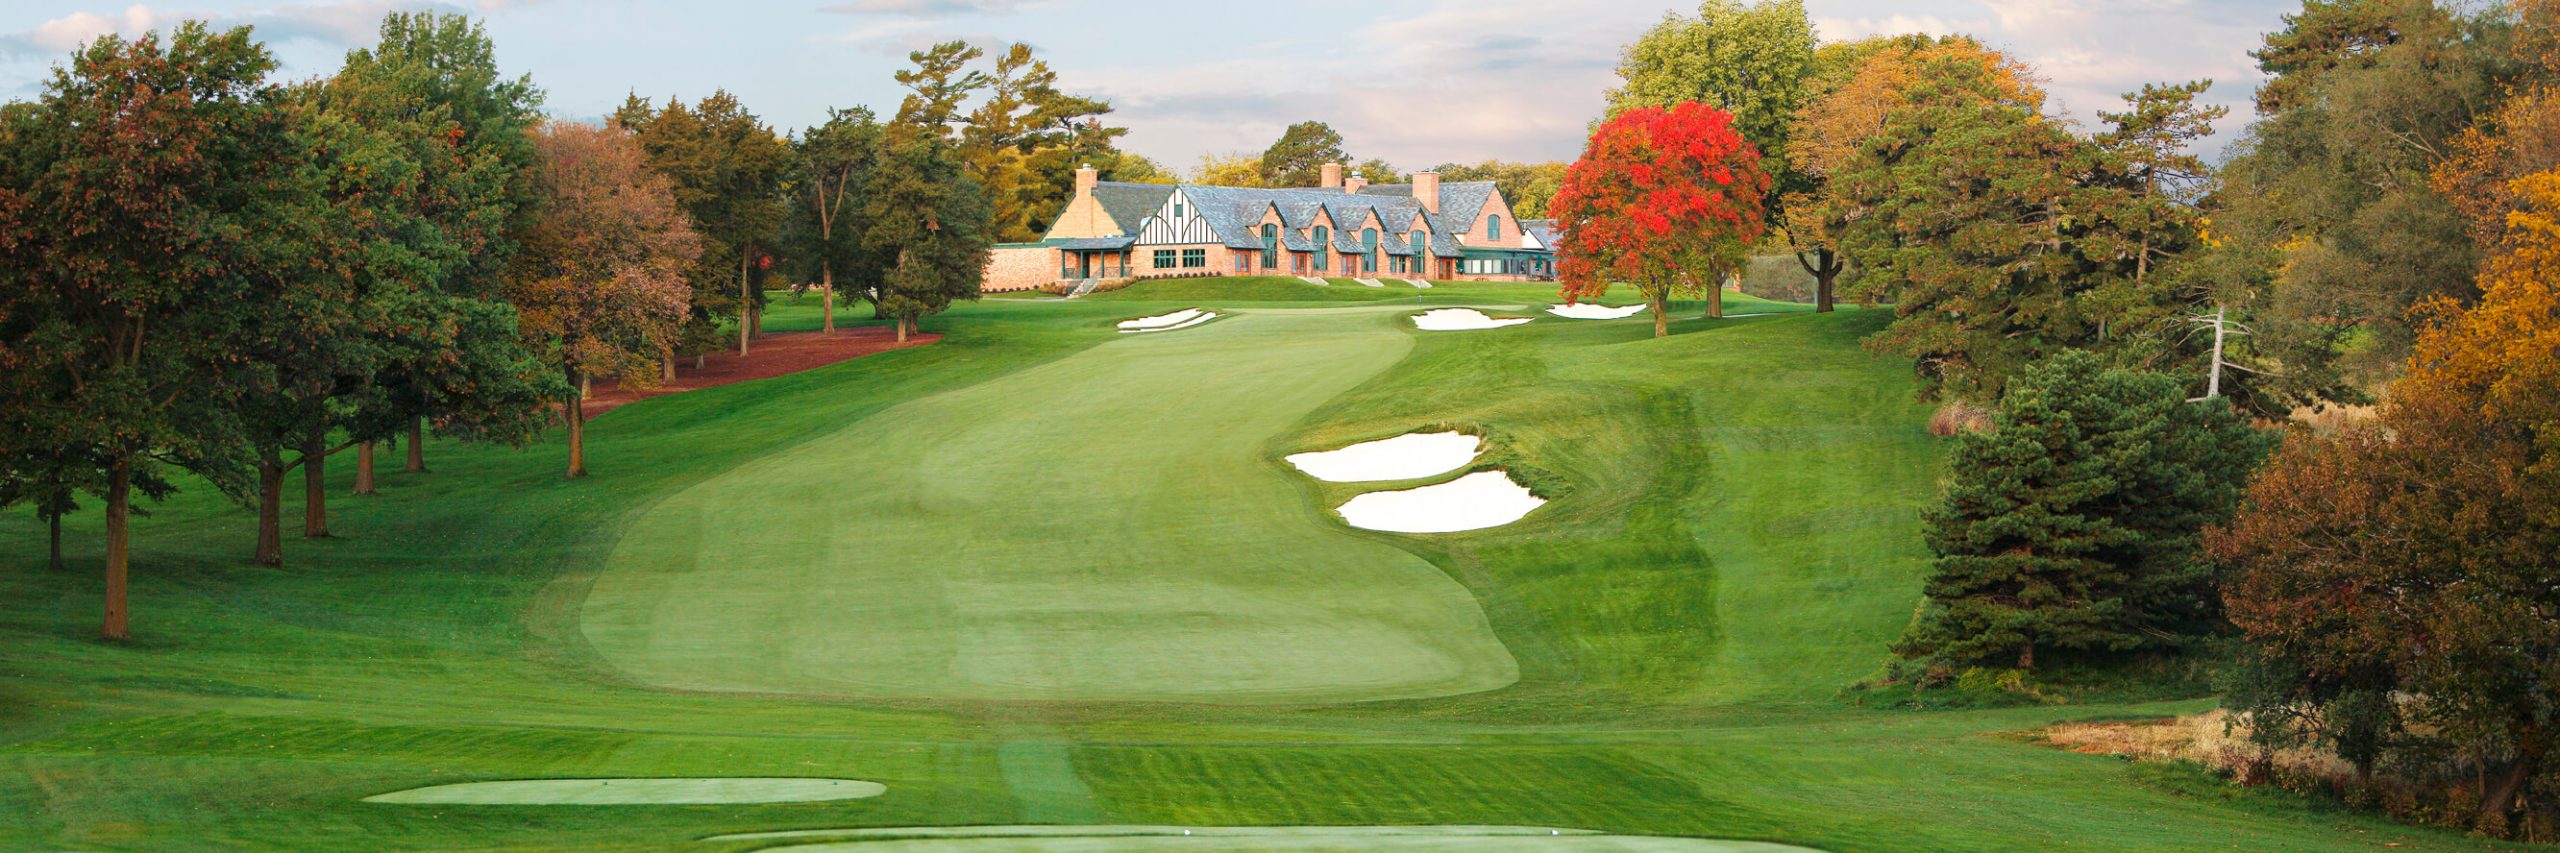 Golf Course Image - Omaha Country Club No. 9